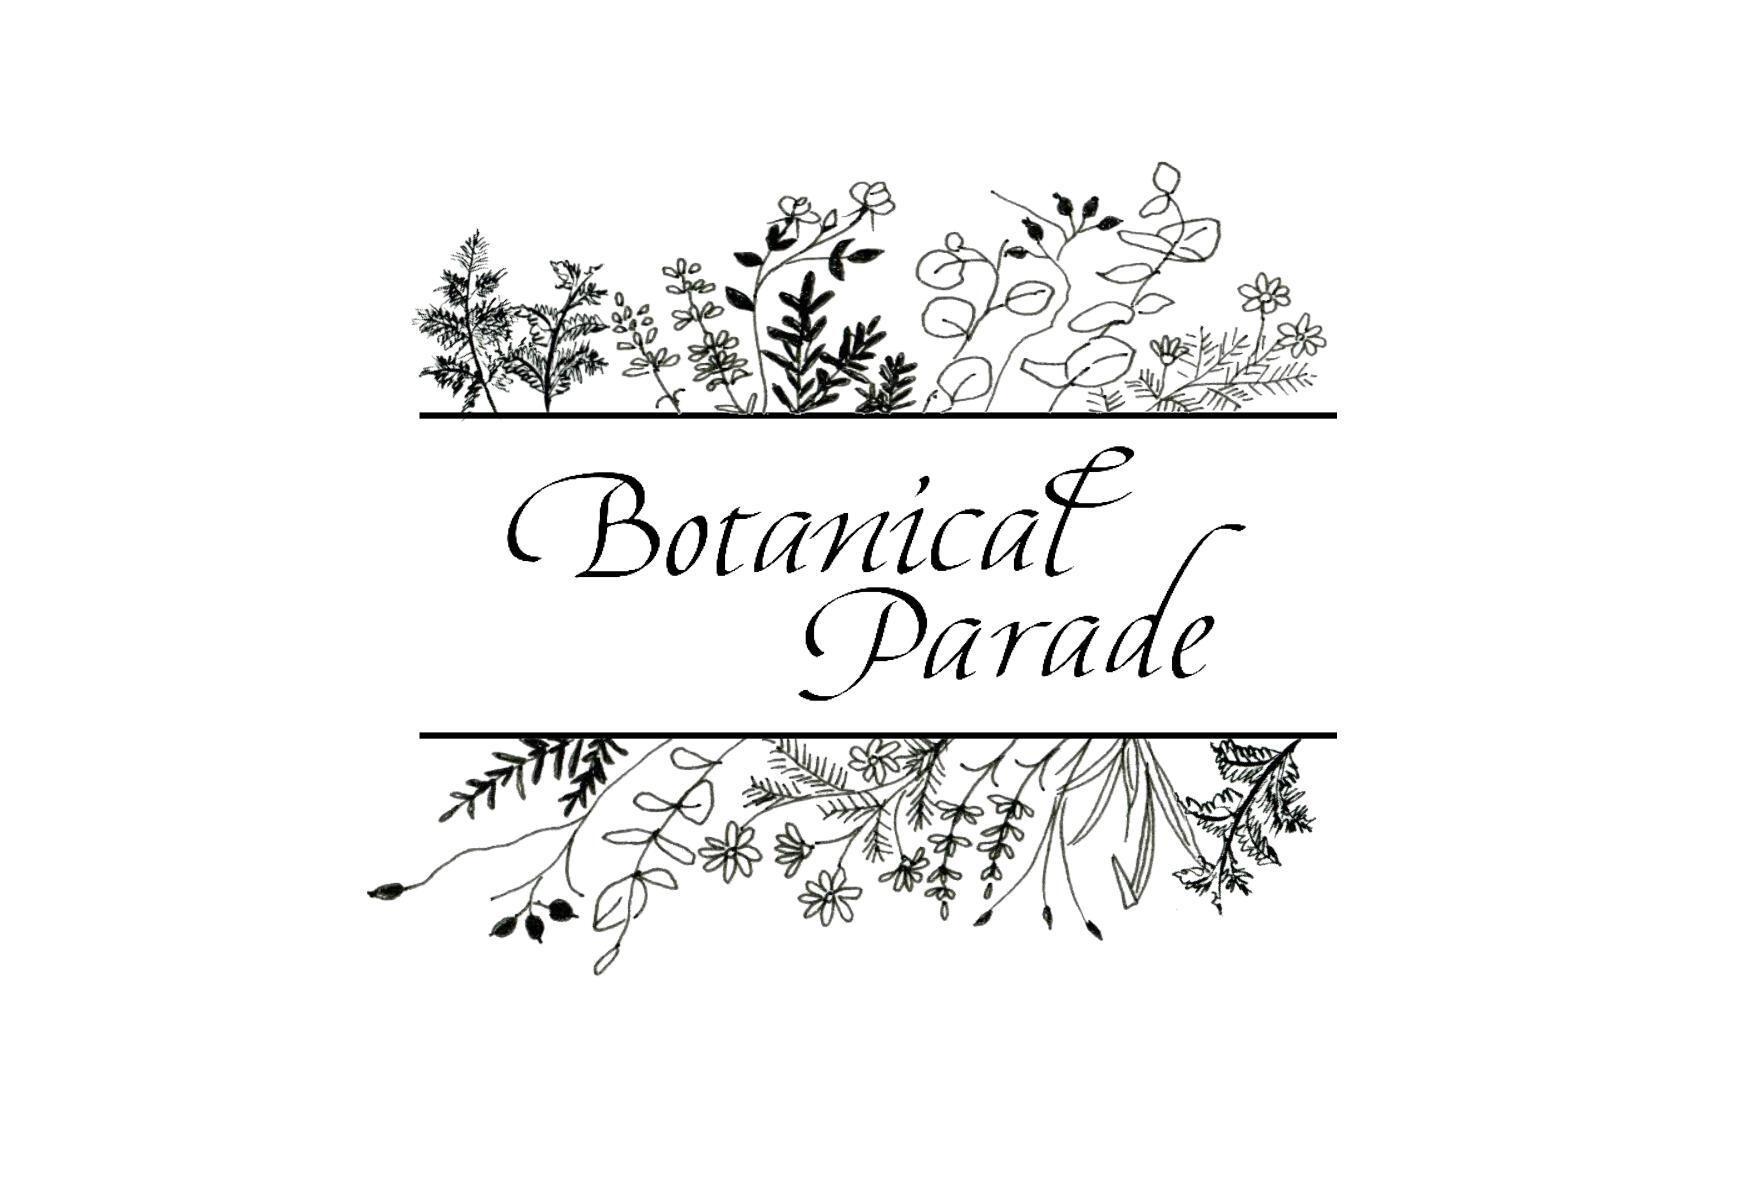 Botanical Parade